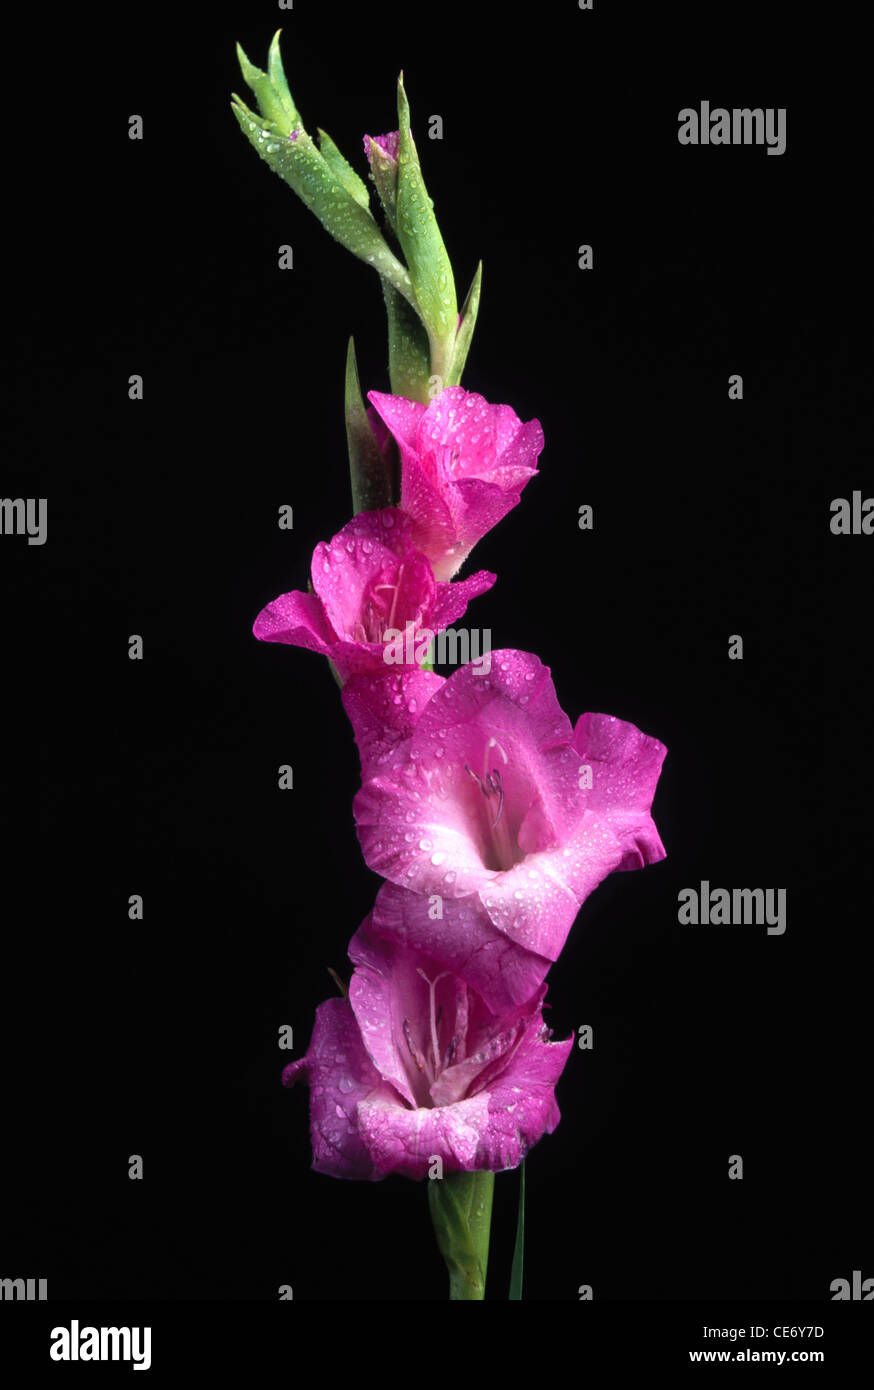 Artificial flowers arrangement of purple violet Gladiolus flower on black background Stock Photo